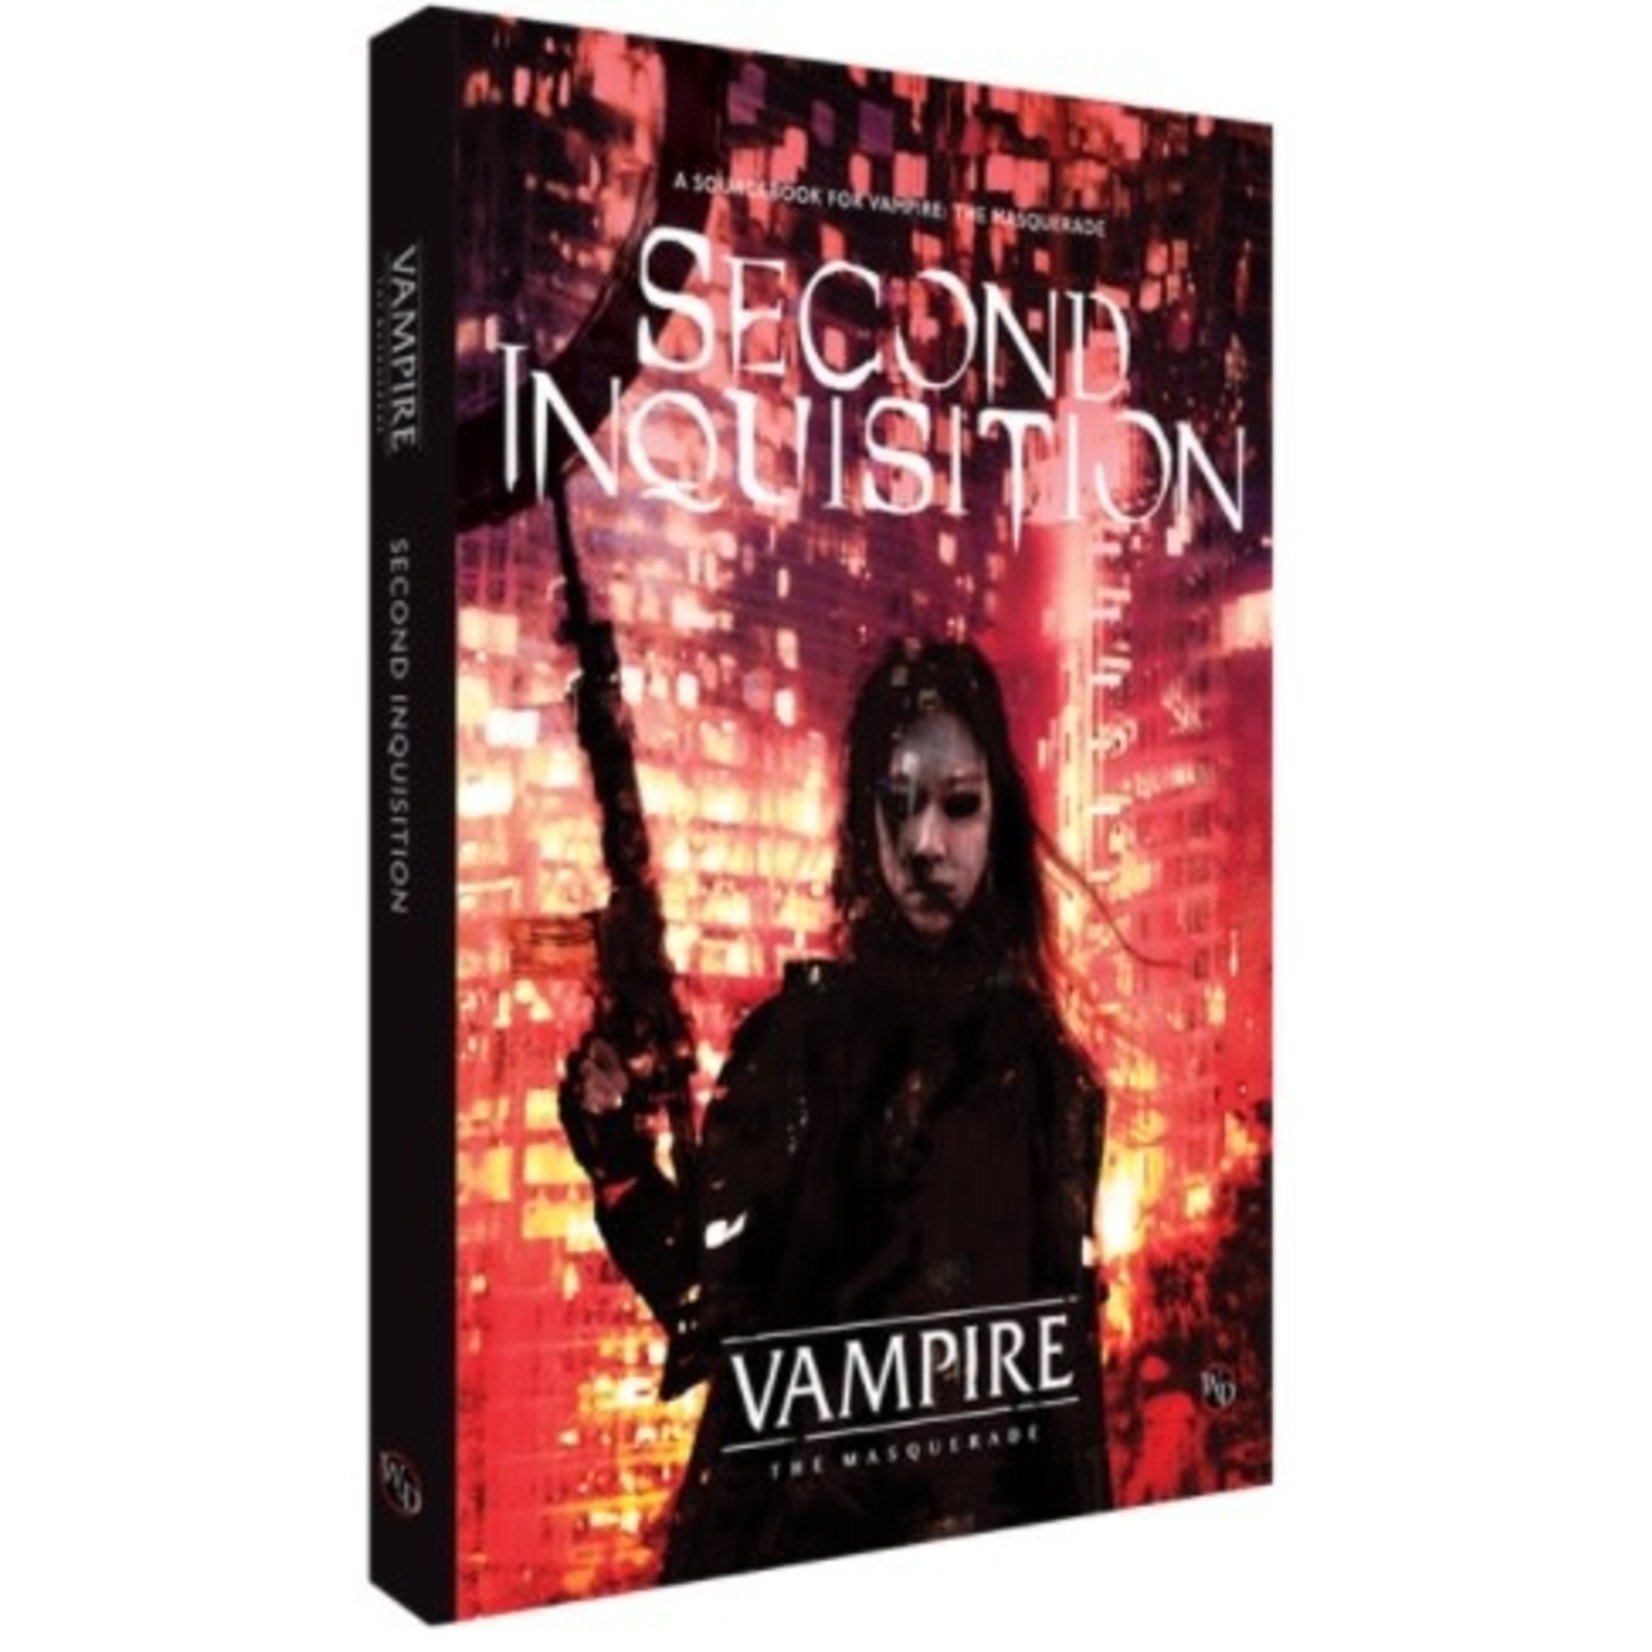 Vampire the Masquerade 5e Second Inquisition Sourcebook